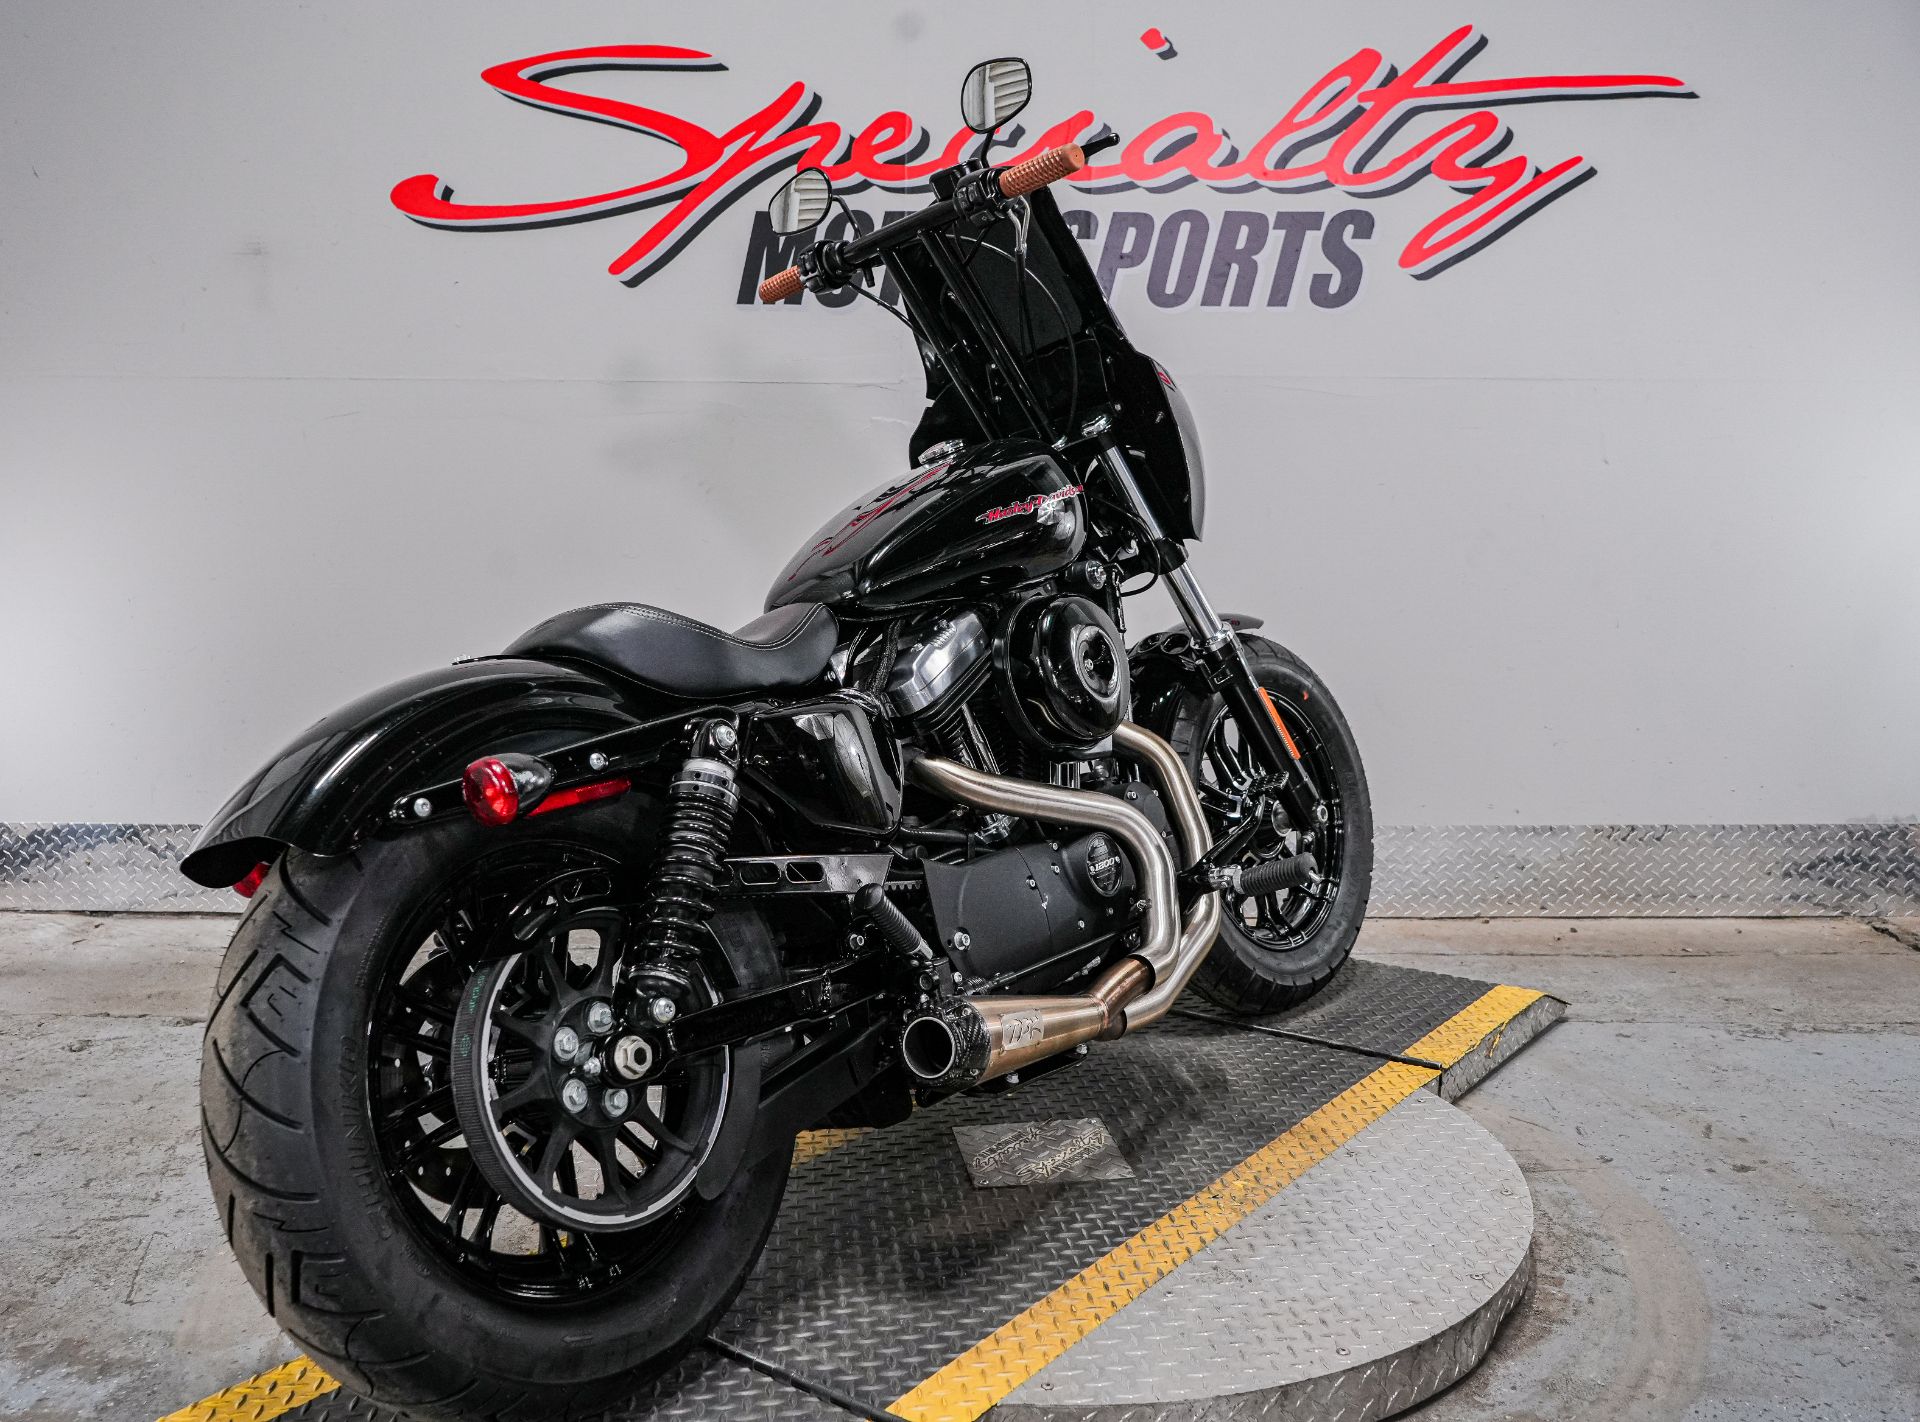 2019 Harley-Davidson Forty-Eight® in Sacramento, California - Photo 2